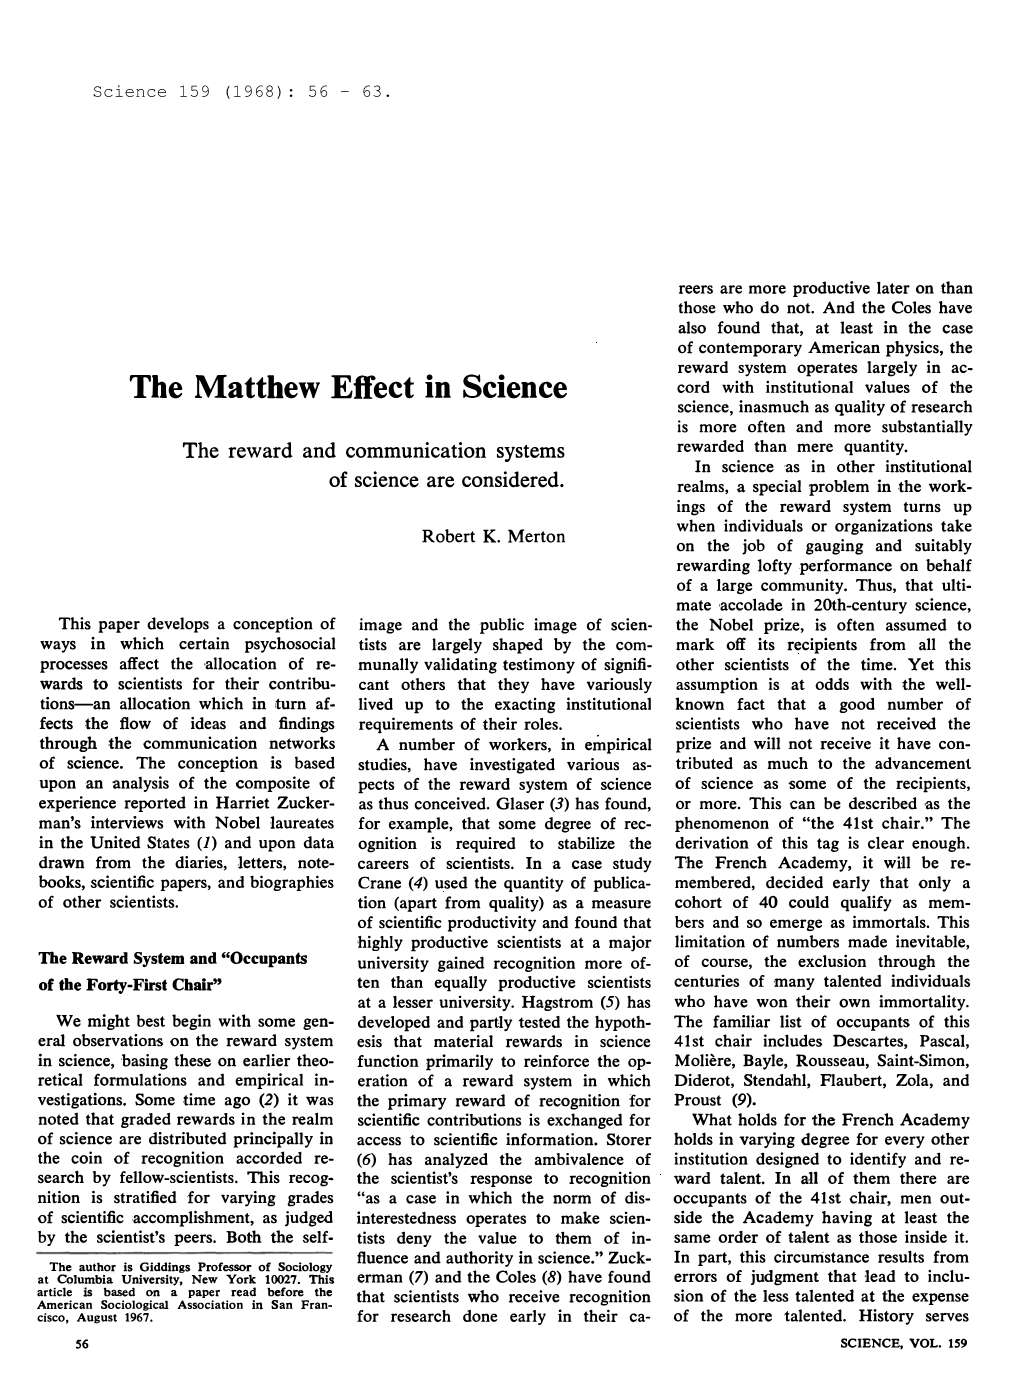 The Matthew Effect in Science